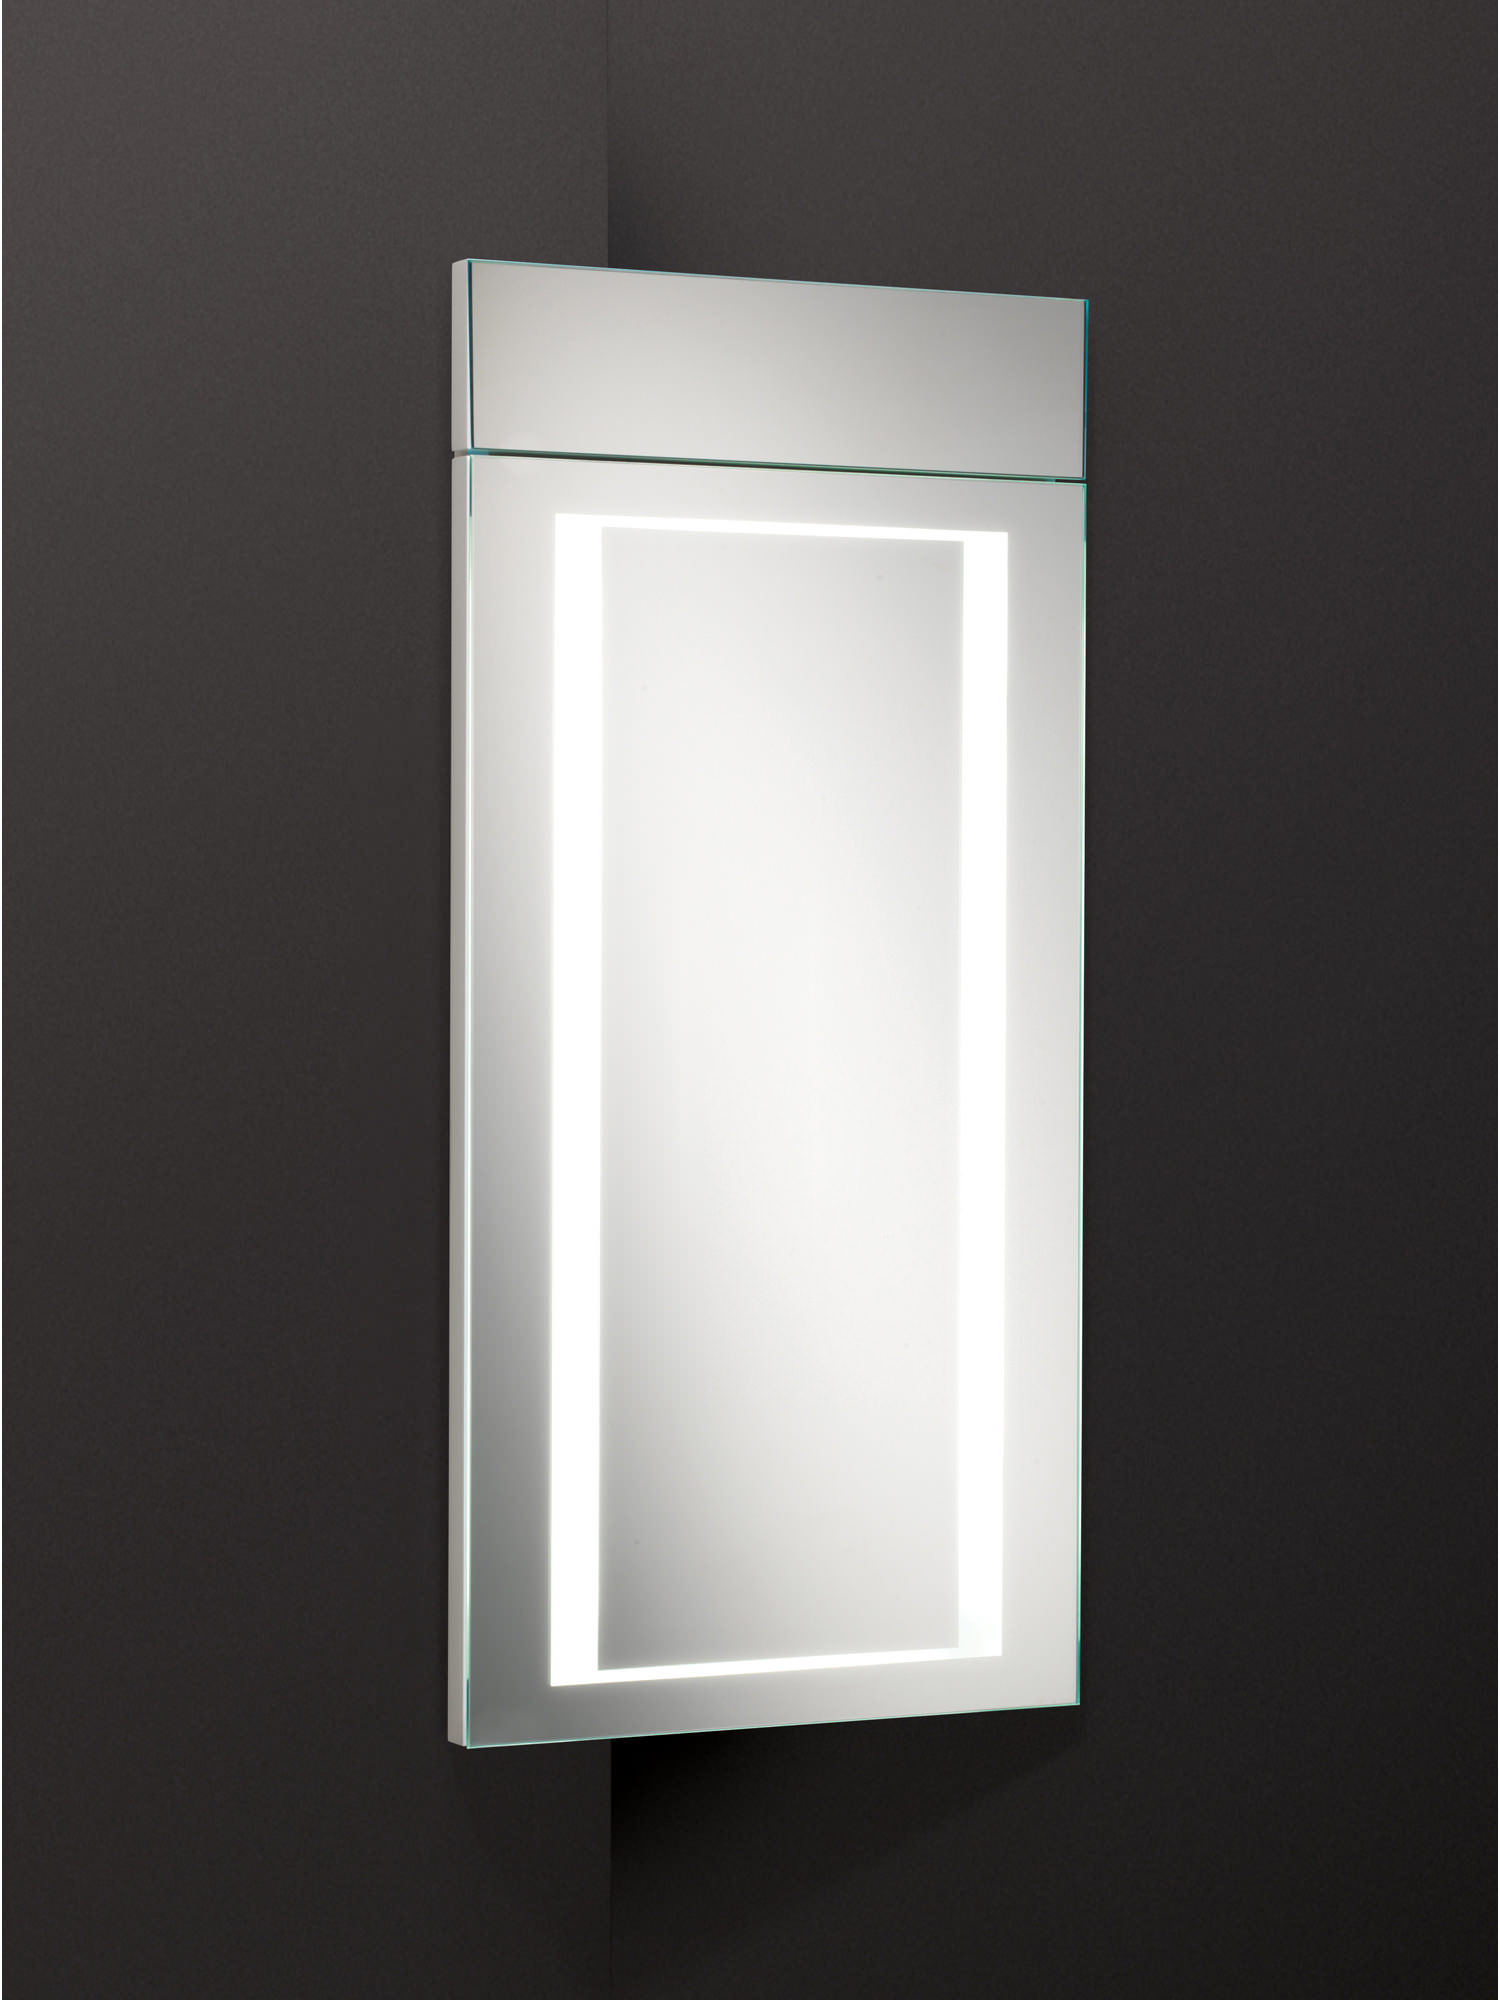 Backlit Bathroom Mirror Australia Cabinet Bathroom Backlit